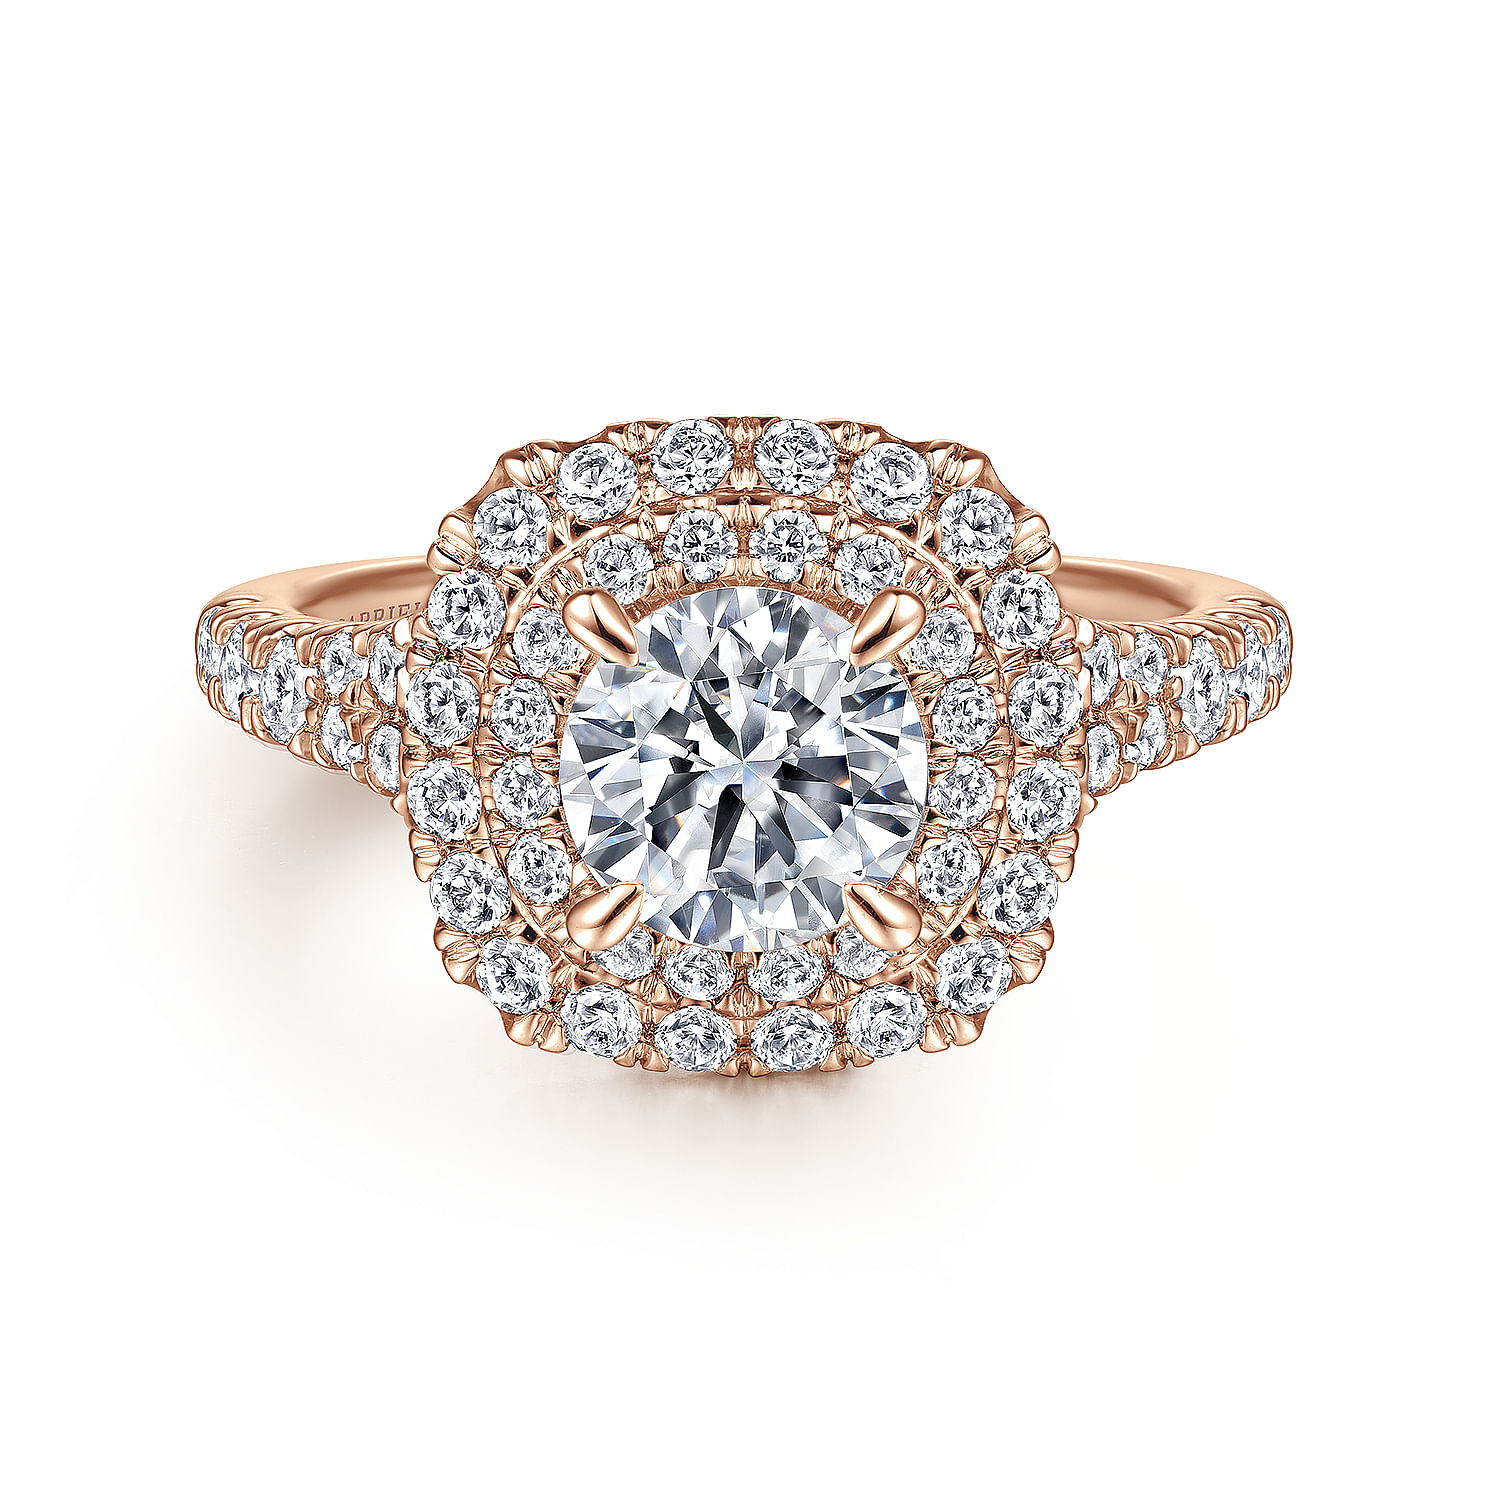 Lexie - 14k Rose Gold Cushion Double Halo Round Diamond Engagement Ring